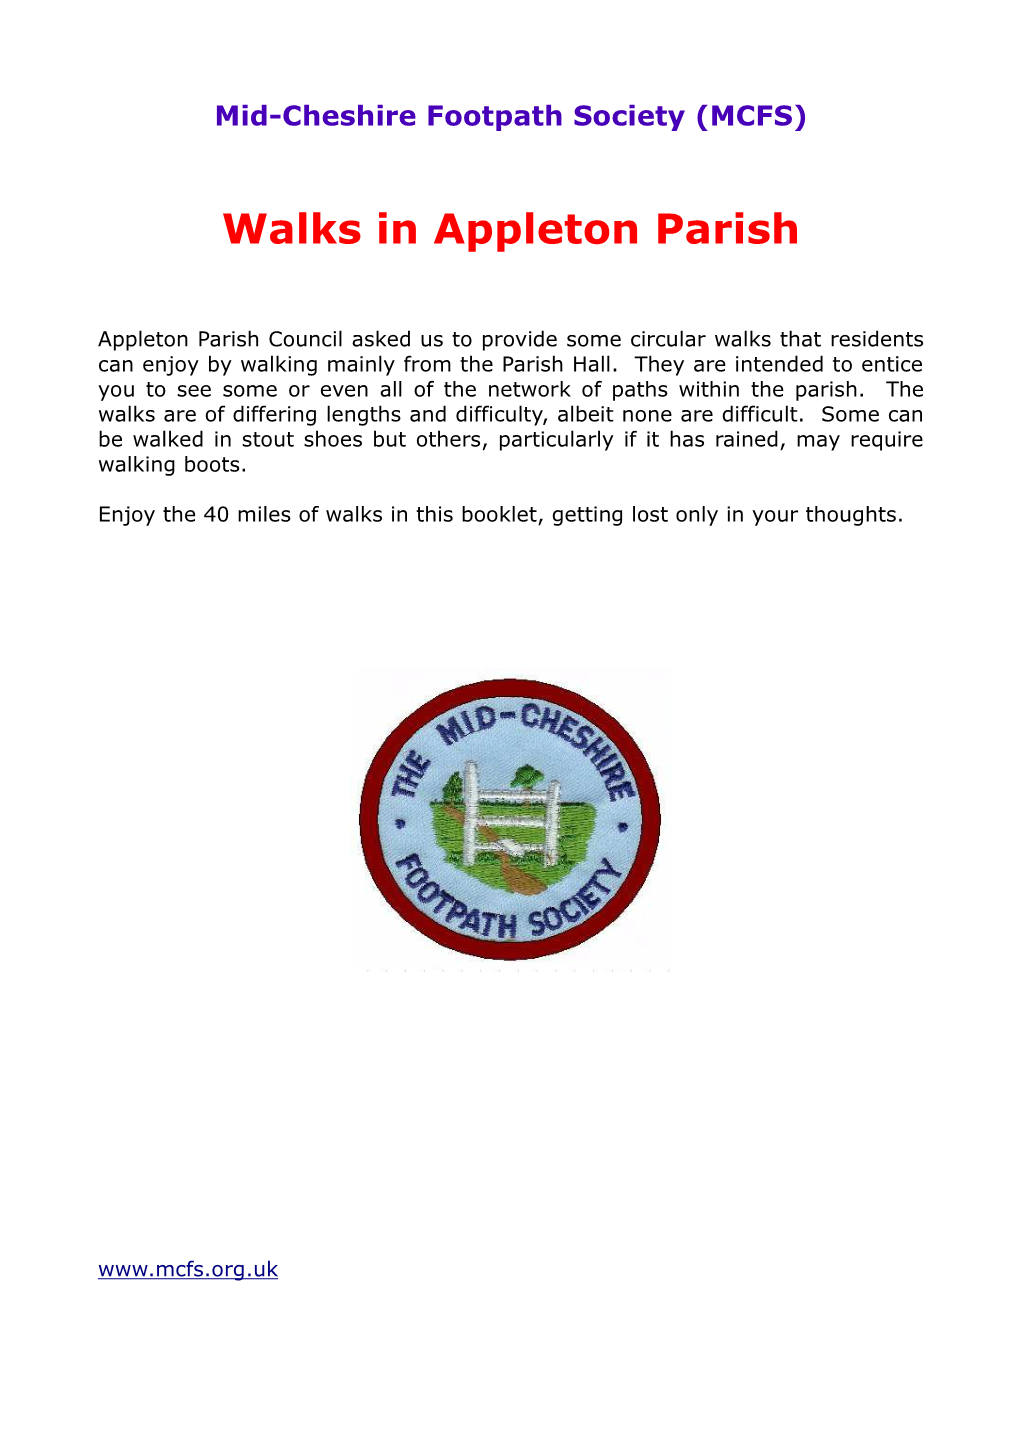 Appleton Parish Walks